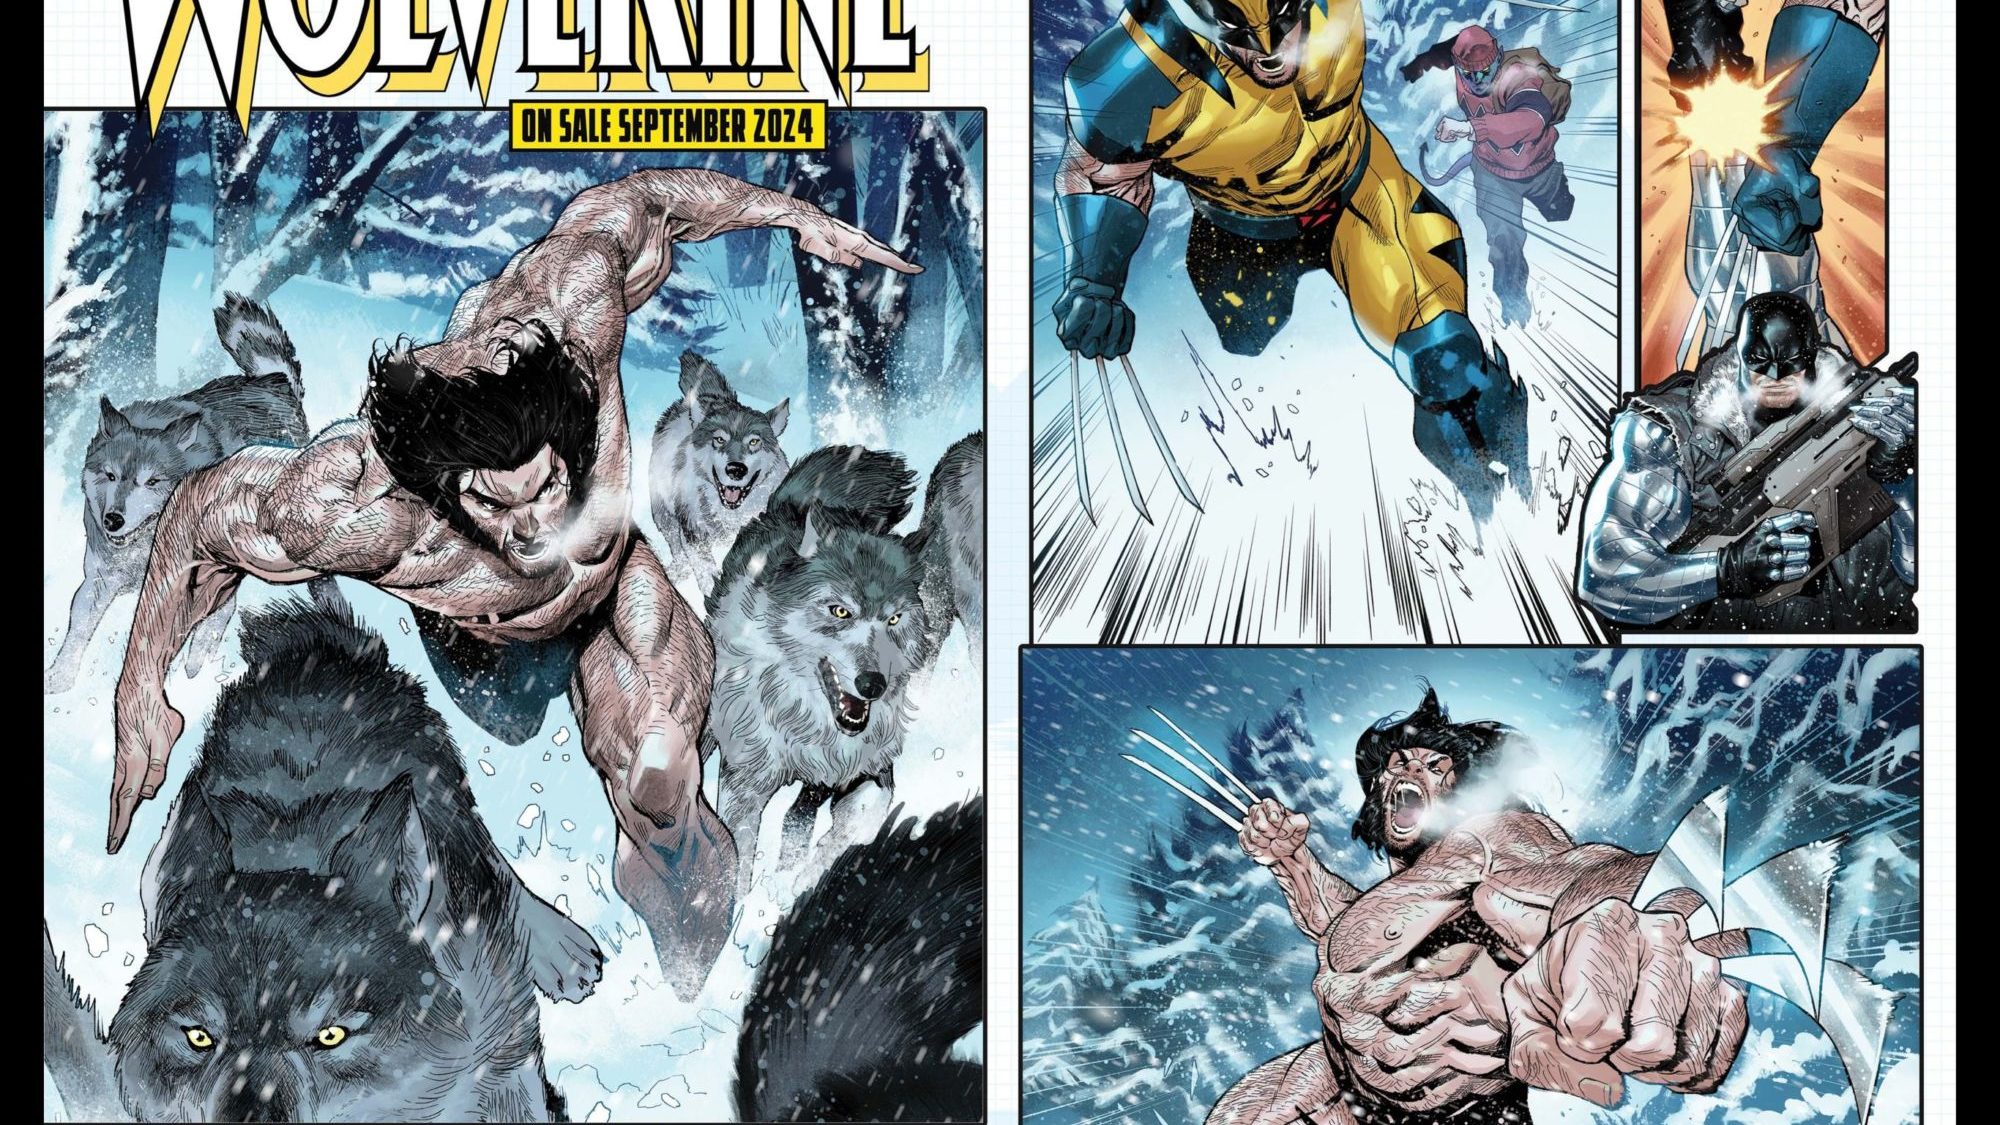 Wolverine #1 From Marvel Comics, Now Including Nightcrawler